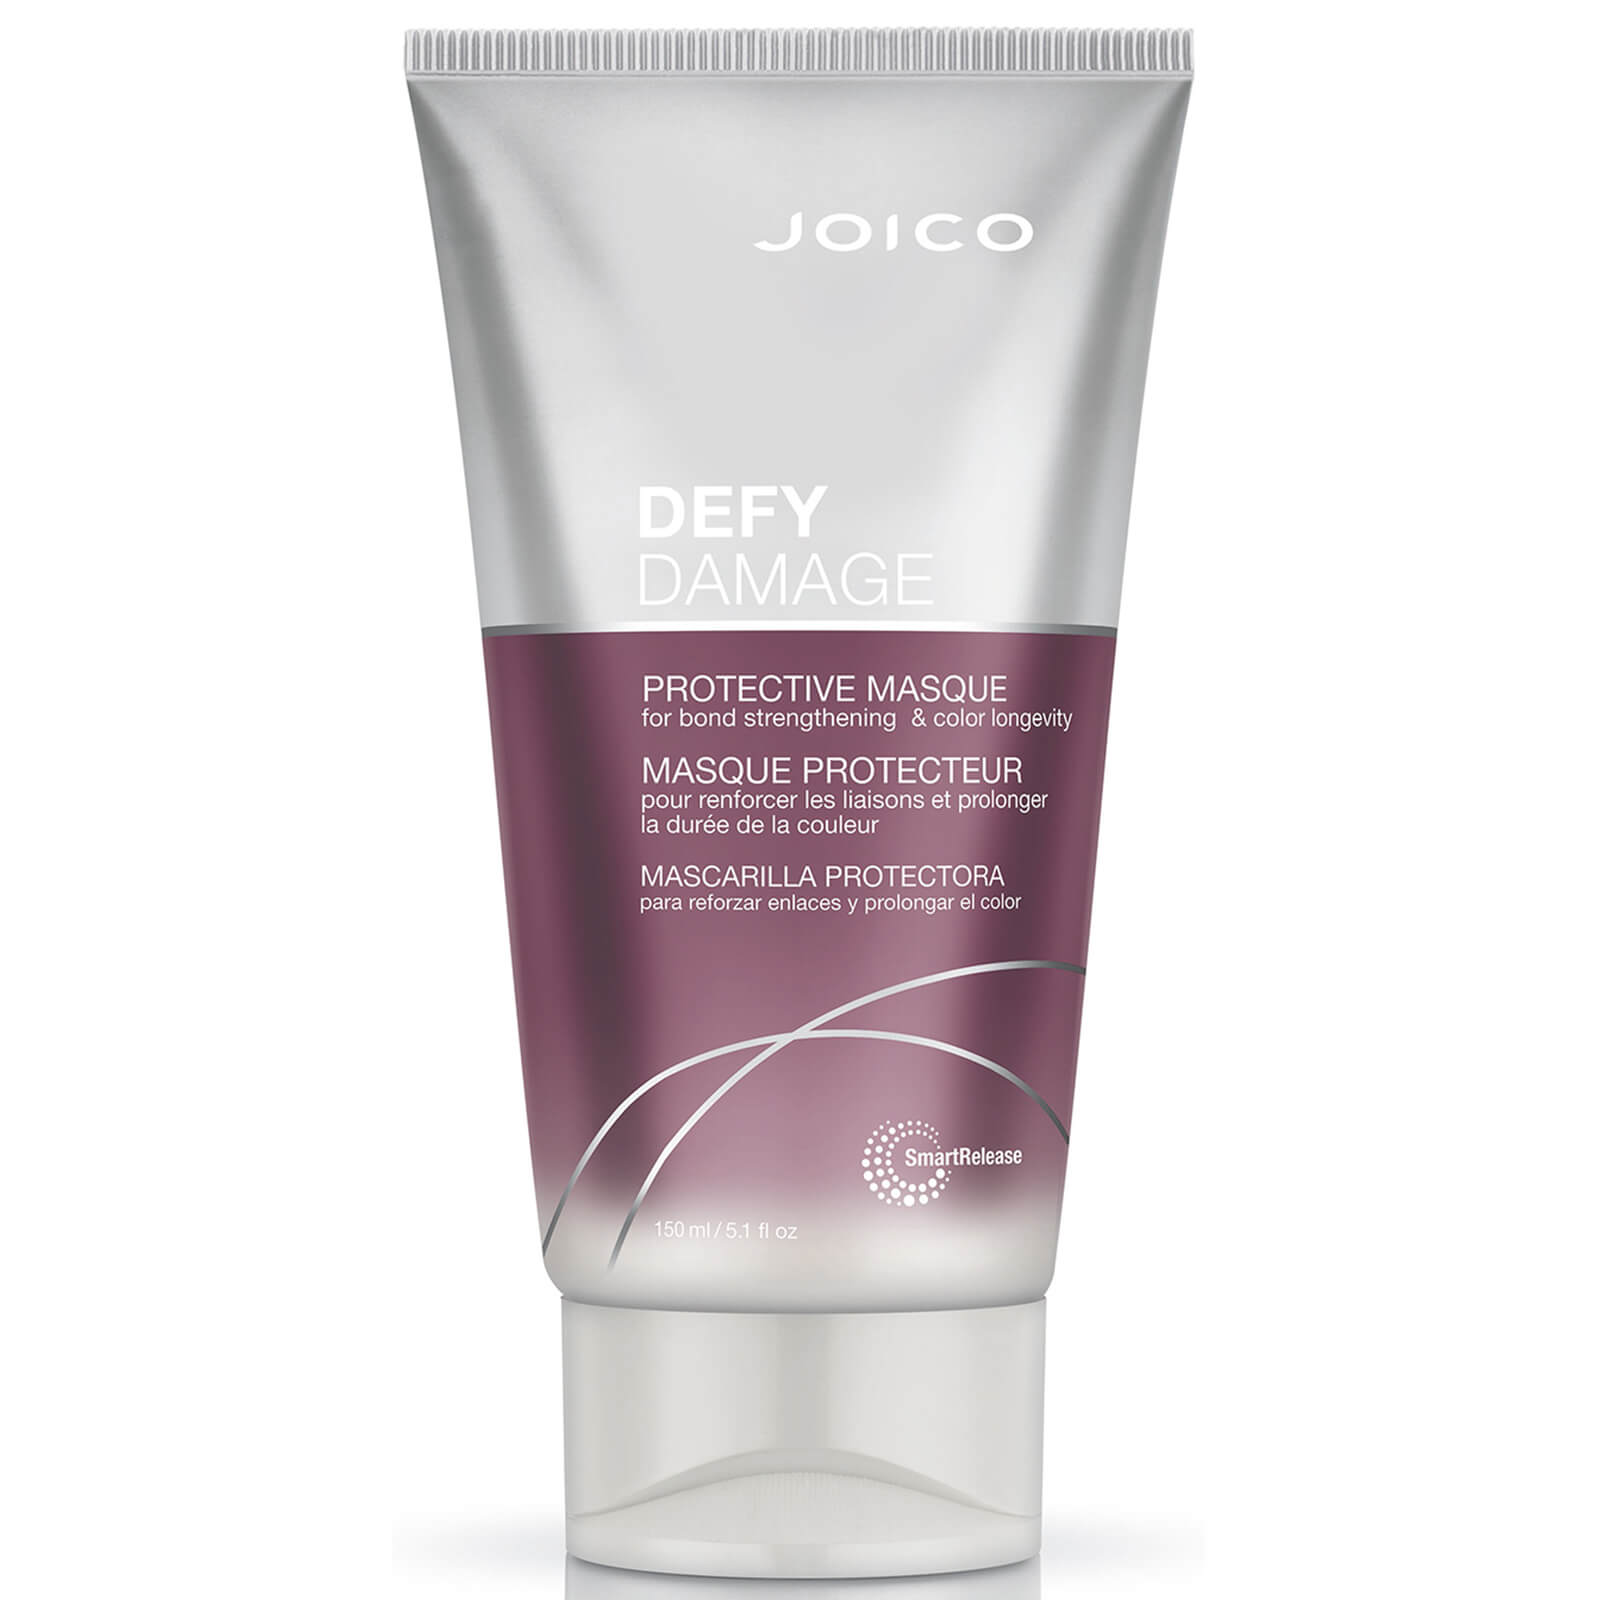 Joico Defy Damage Protective Masque 150ml von Joico